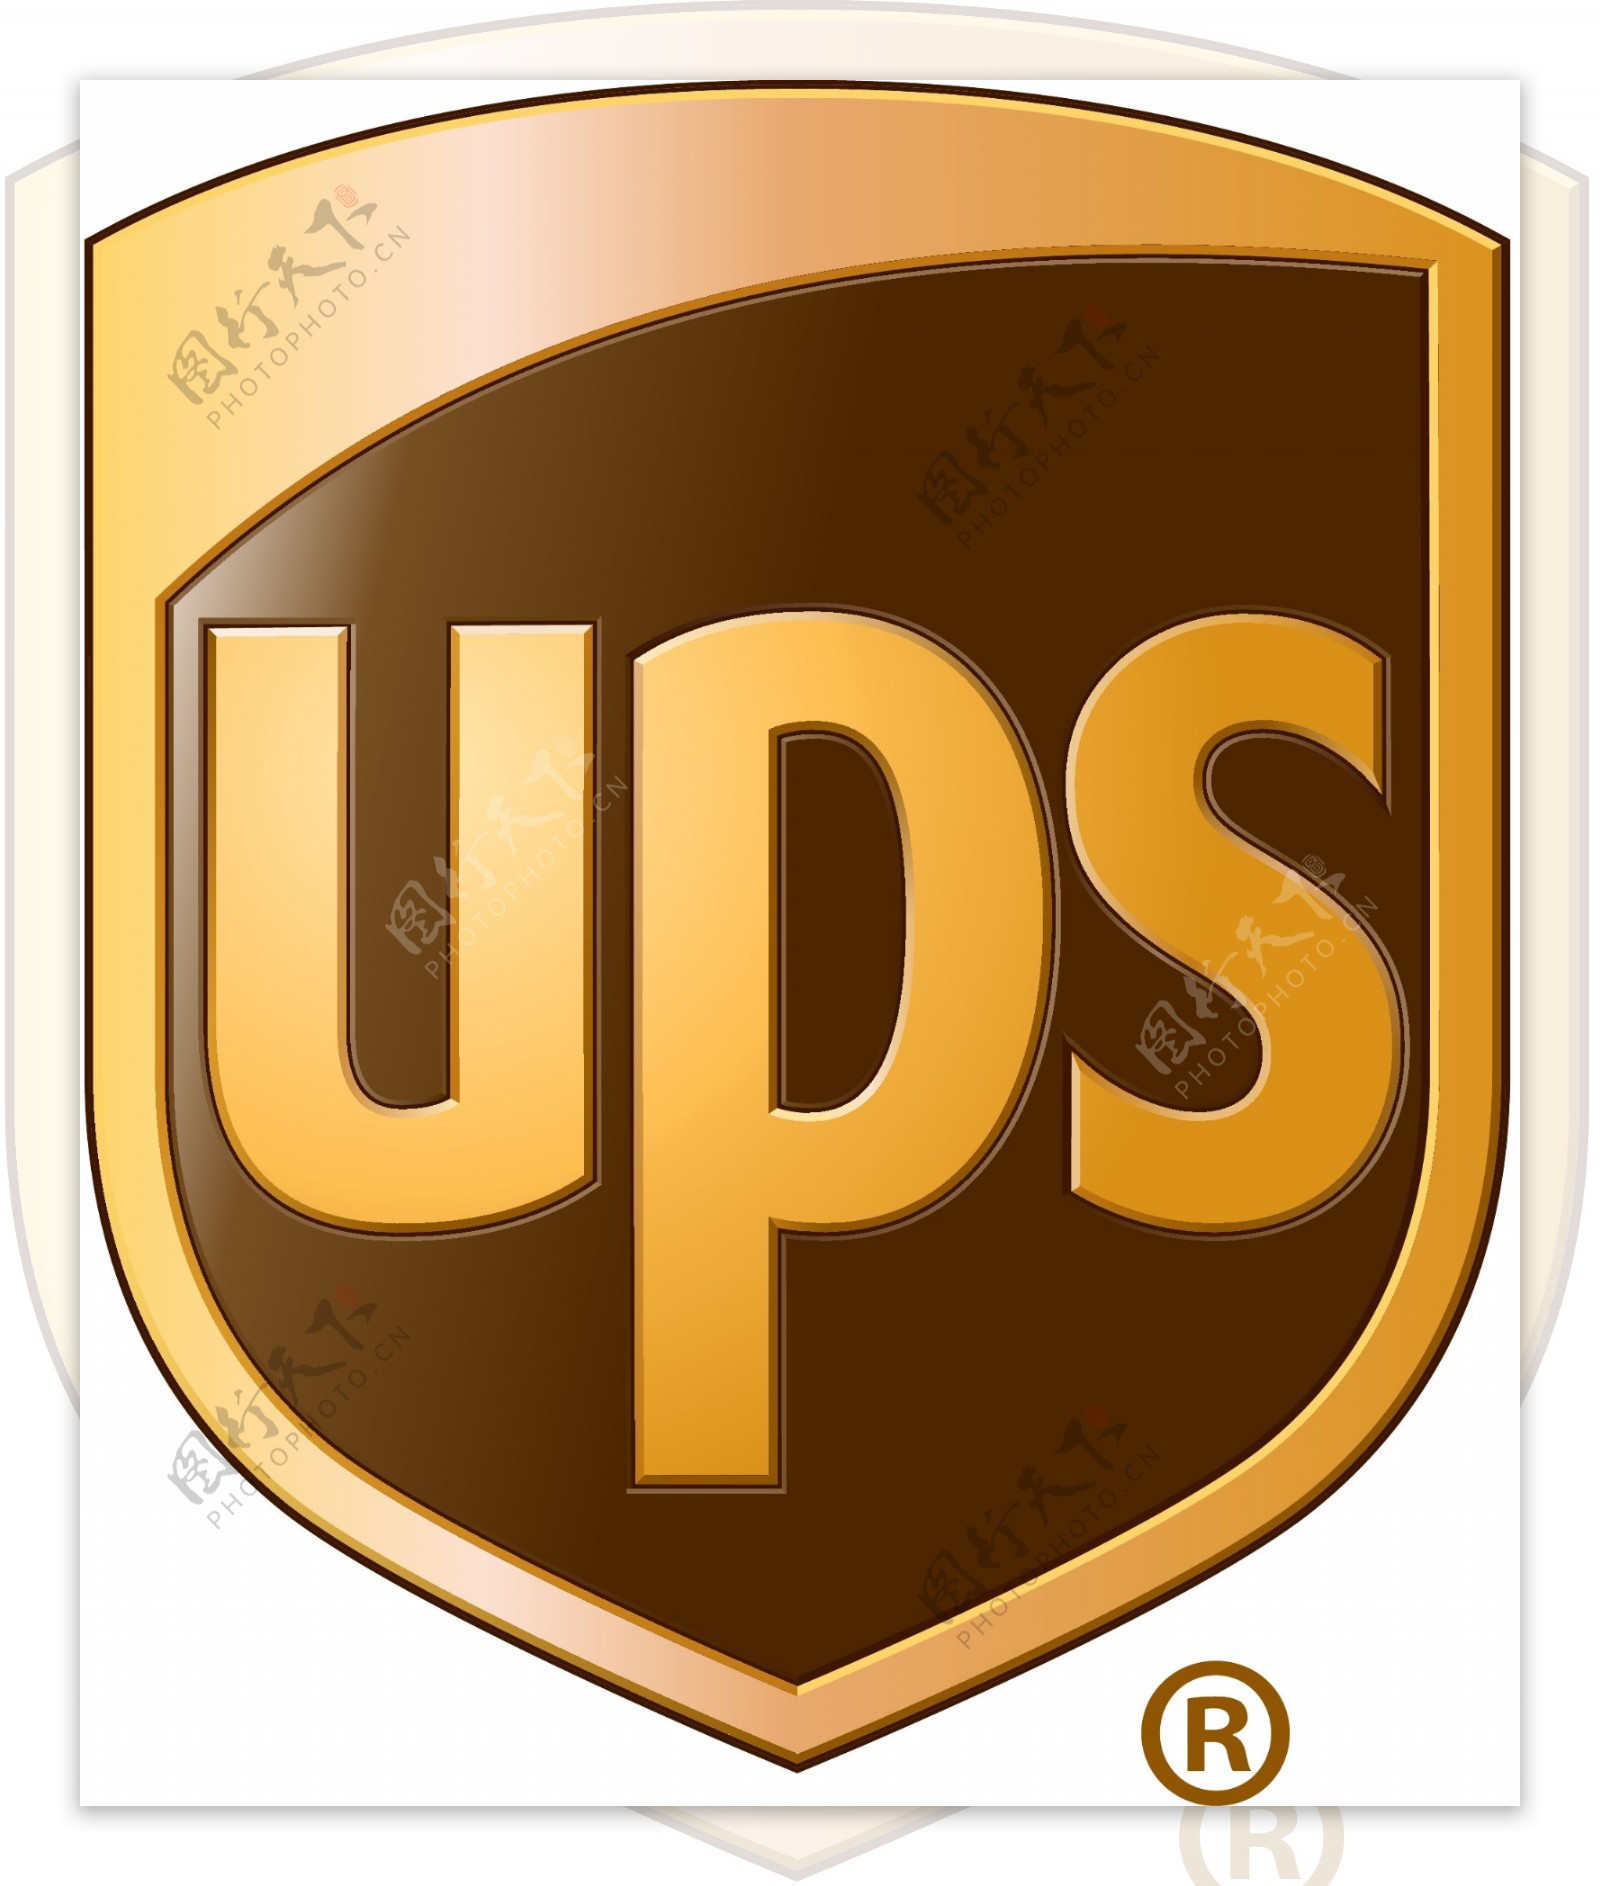 ups矢量logo